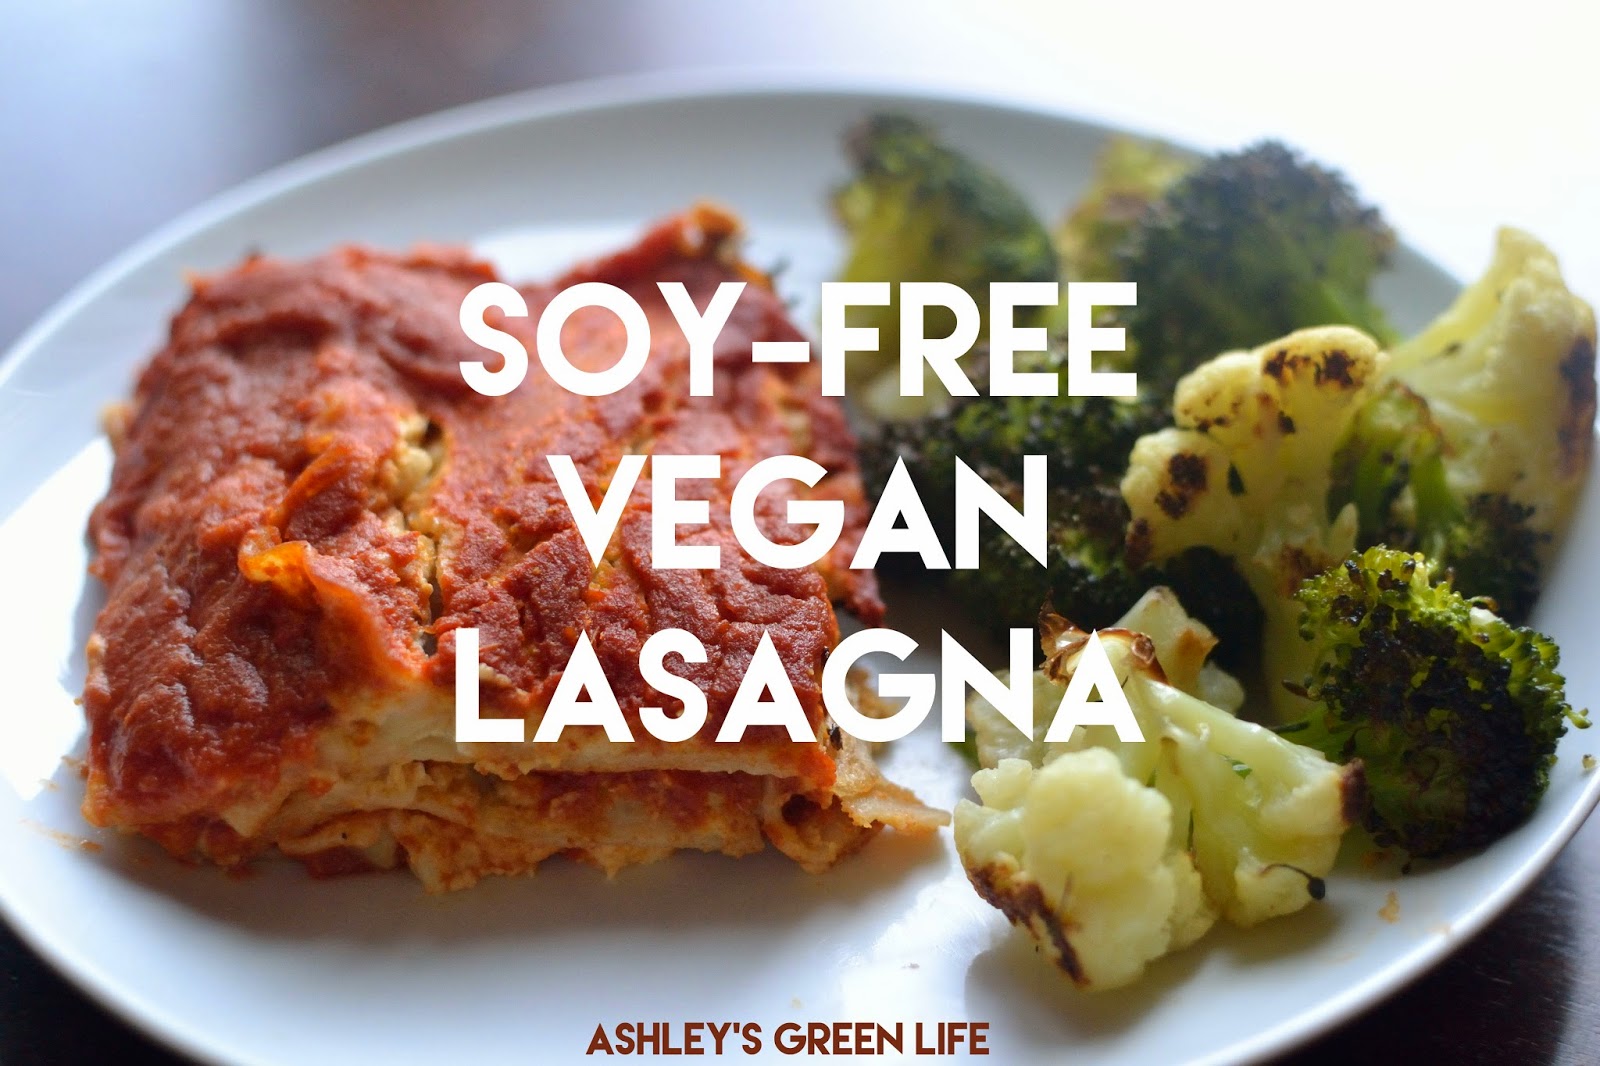 What is a quick vegeterian lasagna recipe?